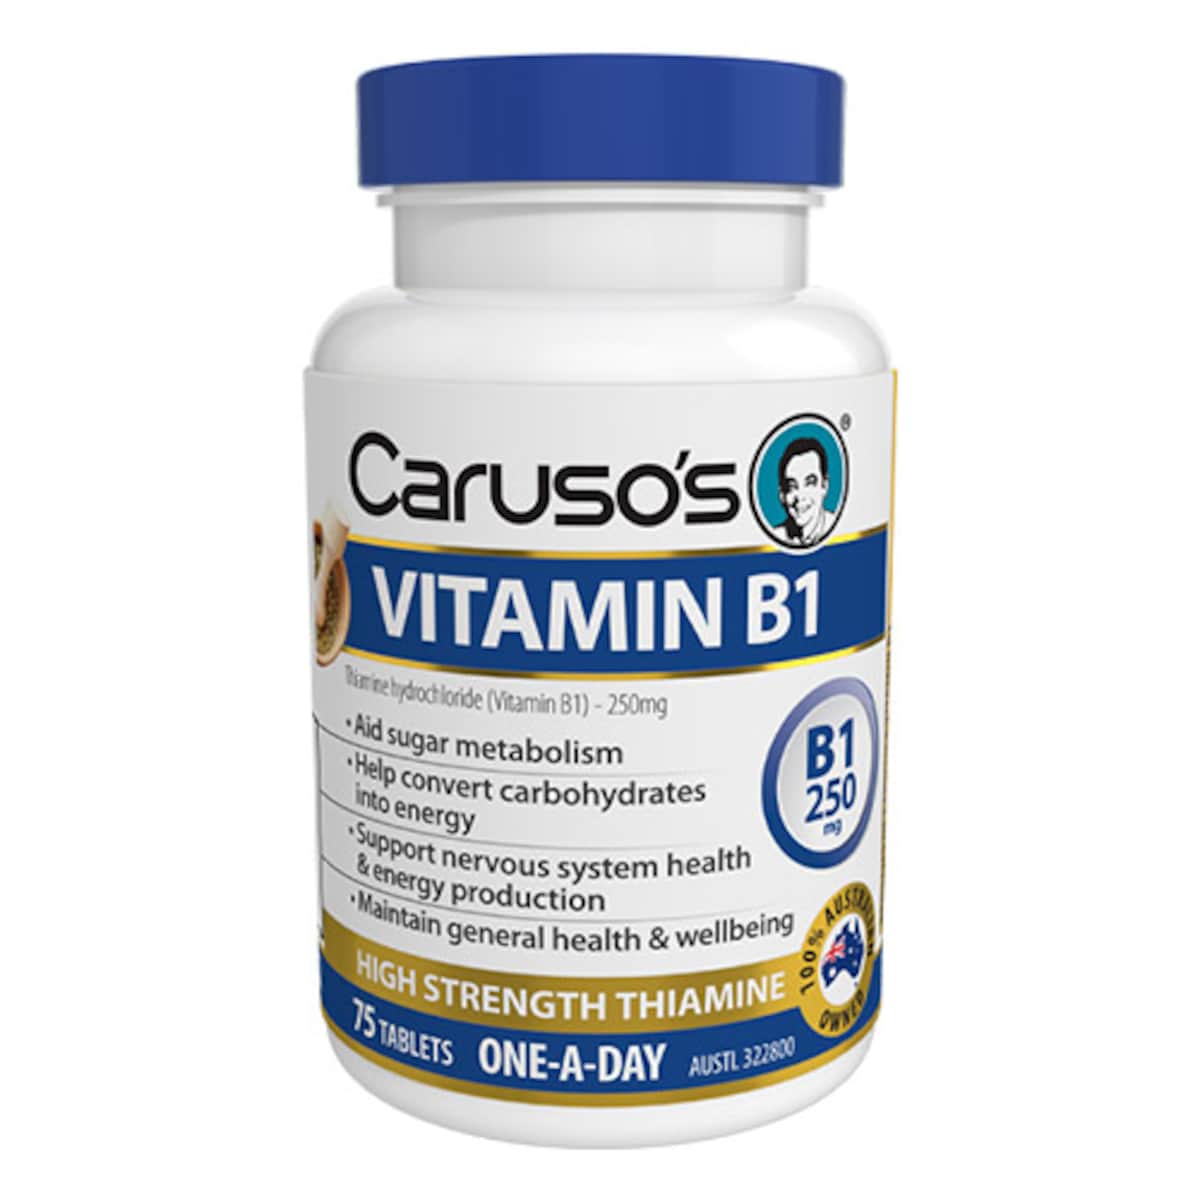 Carusos Vitamin B1 High Strength Thiamine 75 Tablets Australia